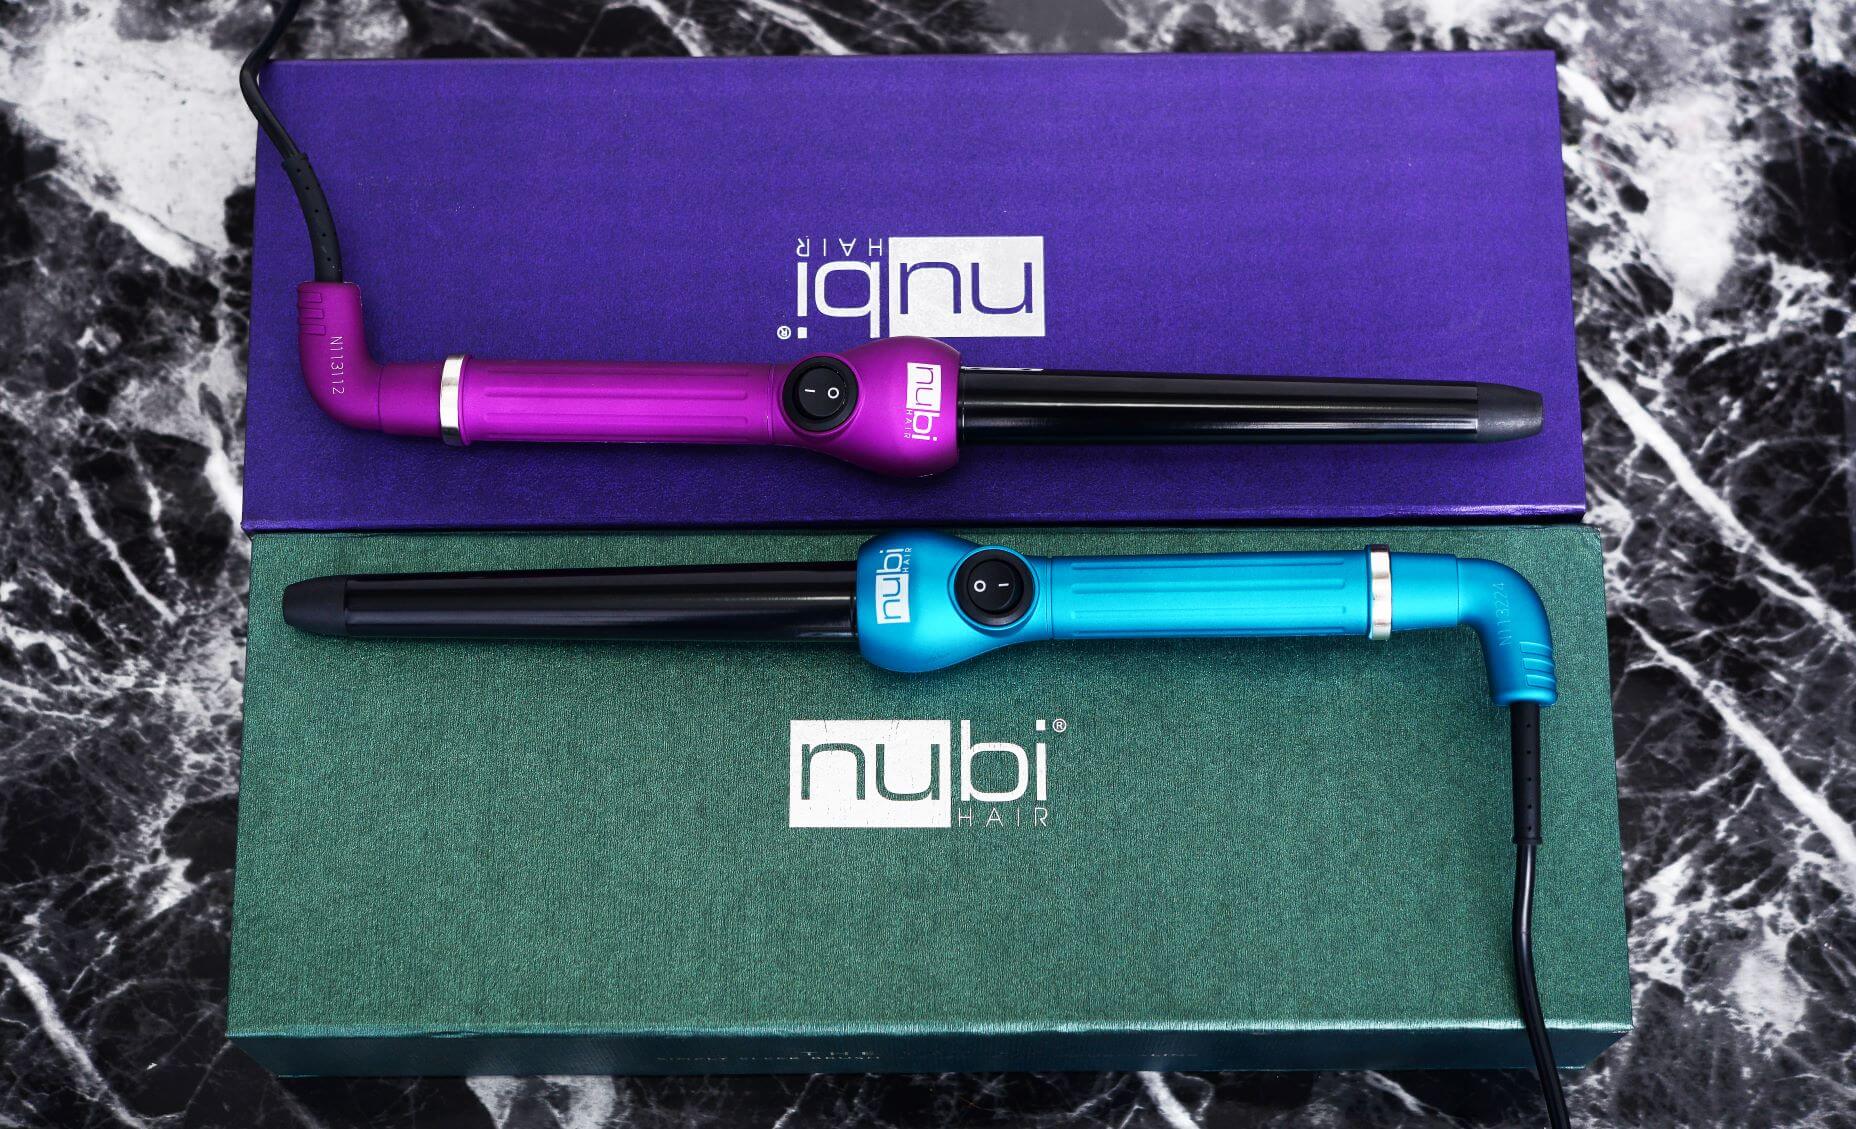 nubi hair wands